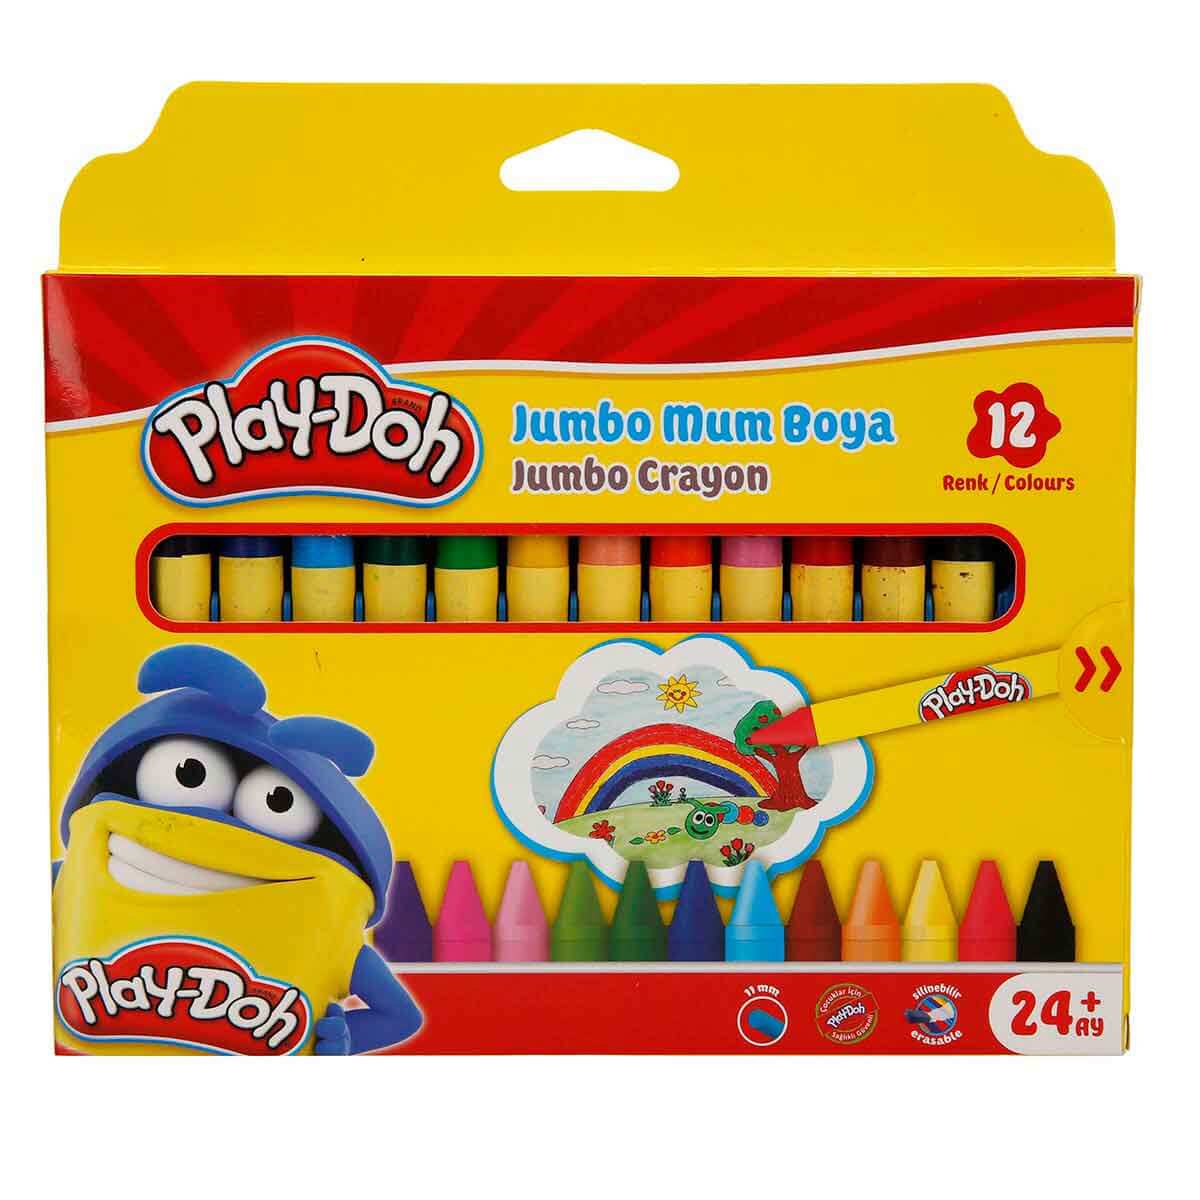 Play-Doh Jumbo Mum Boya Silindir 12'Li (Karton Kutu) 